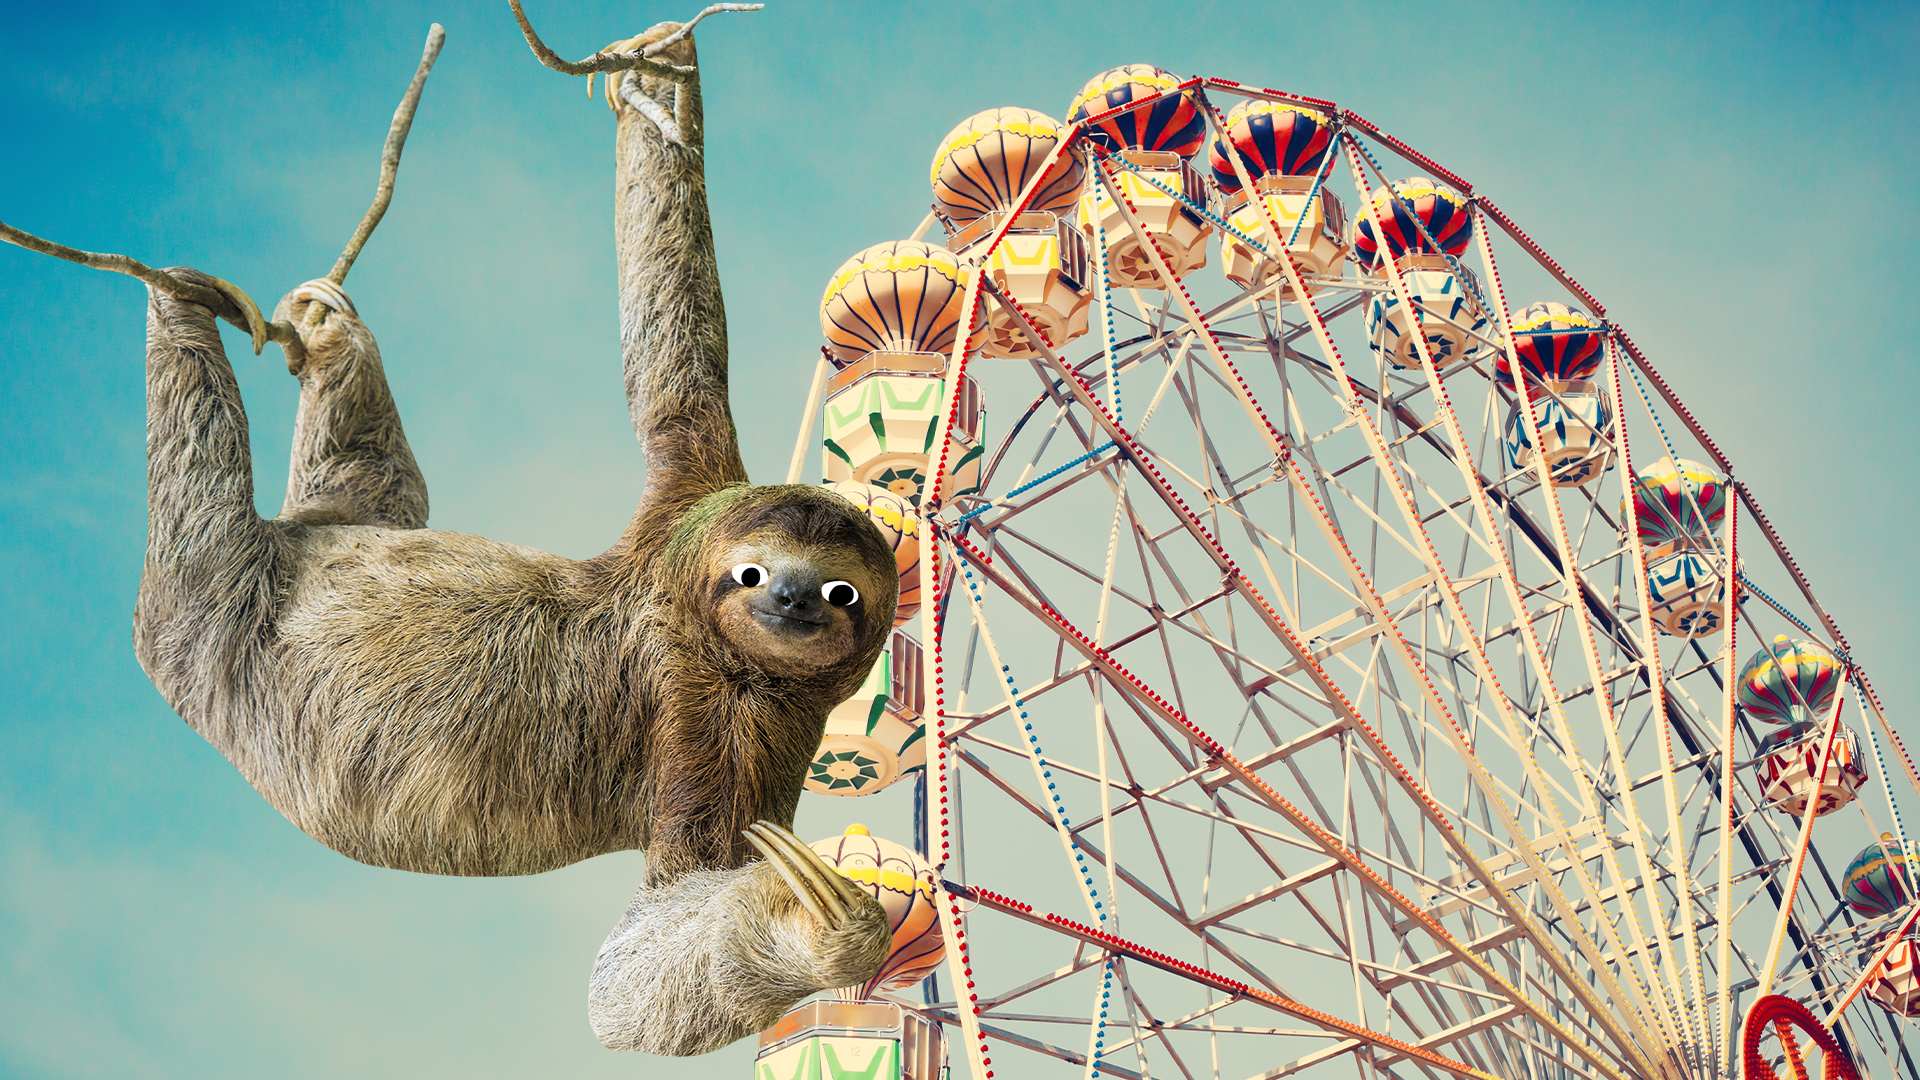 Sloth and Ferris wheel